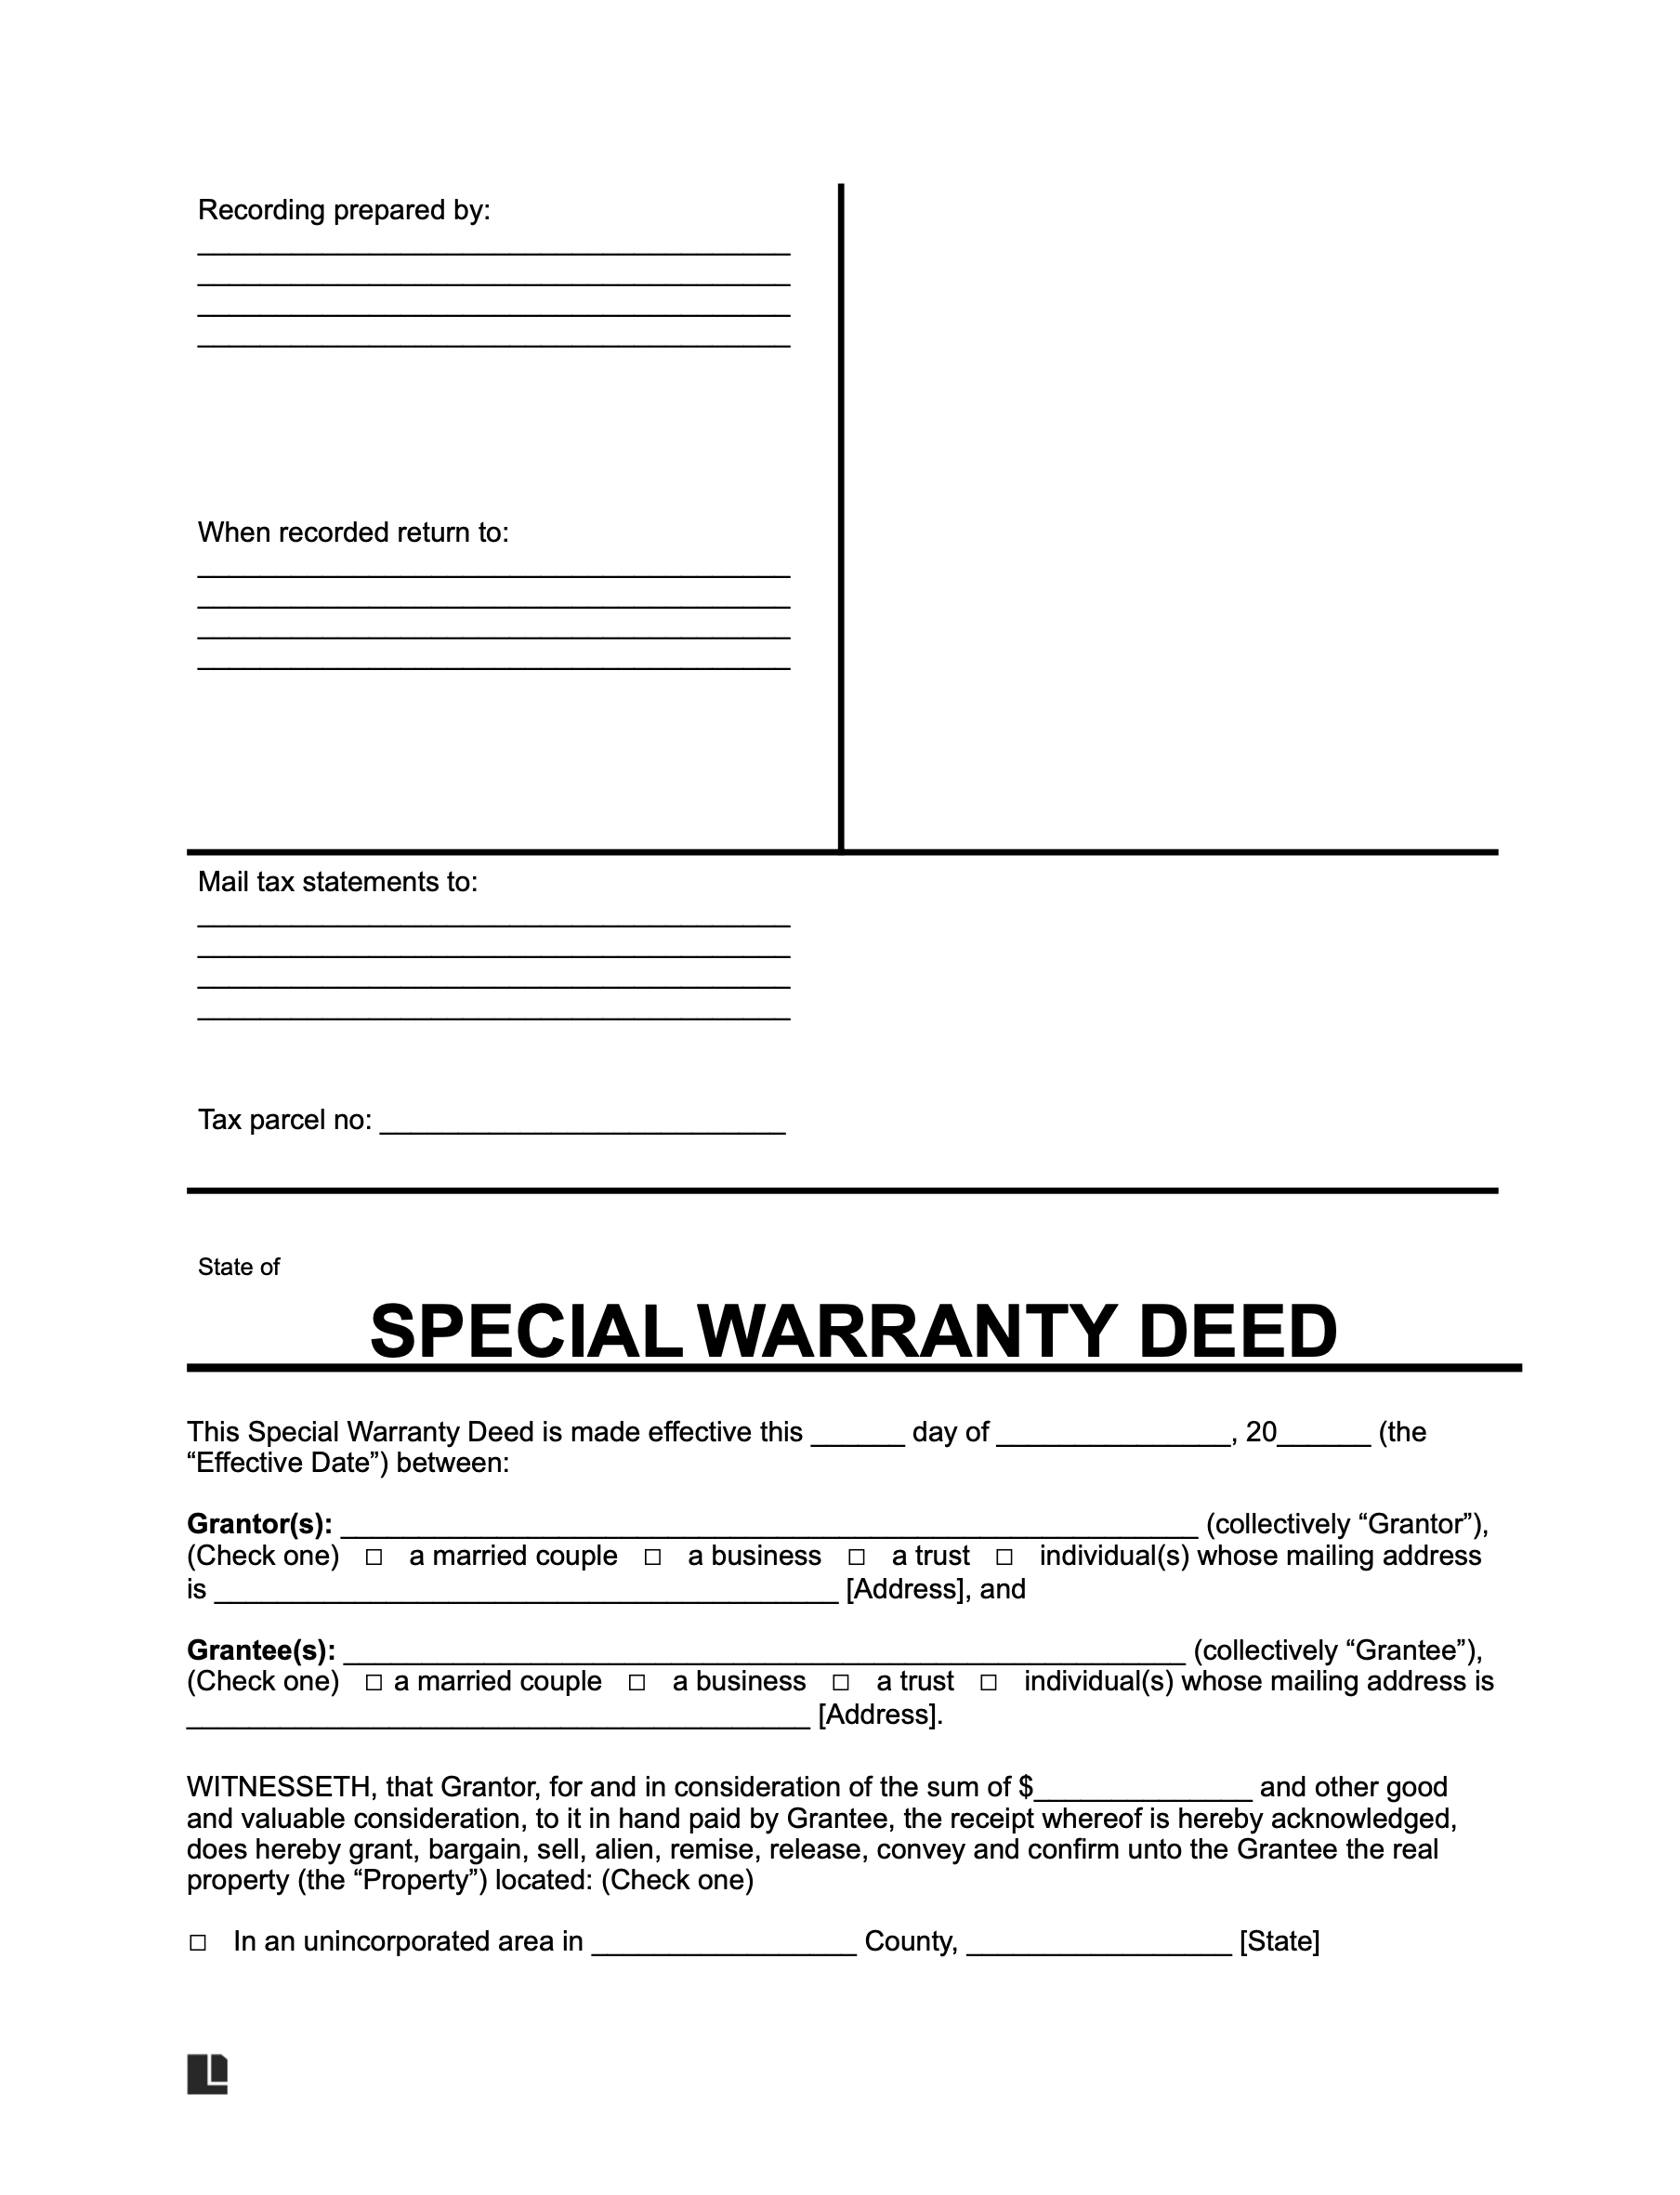 Special Warranty Deed Template